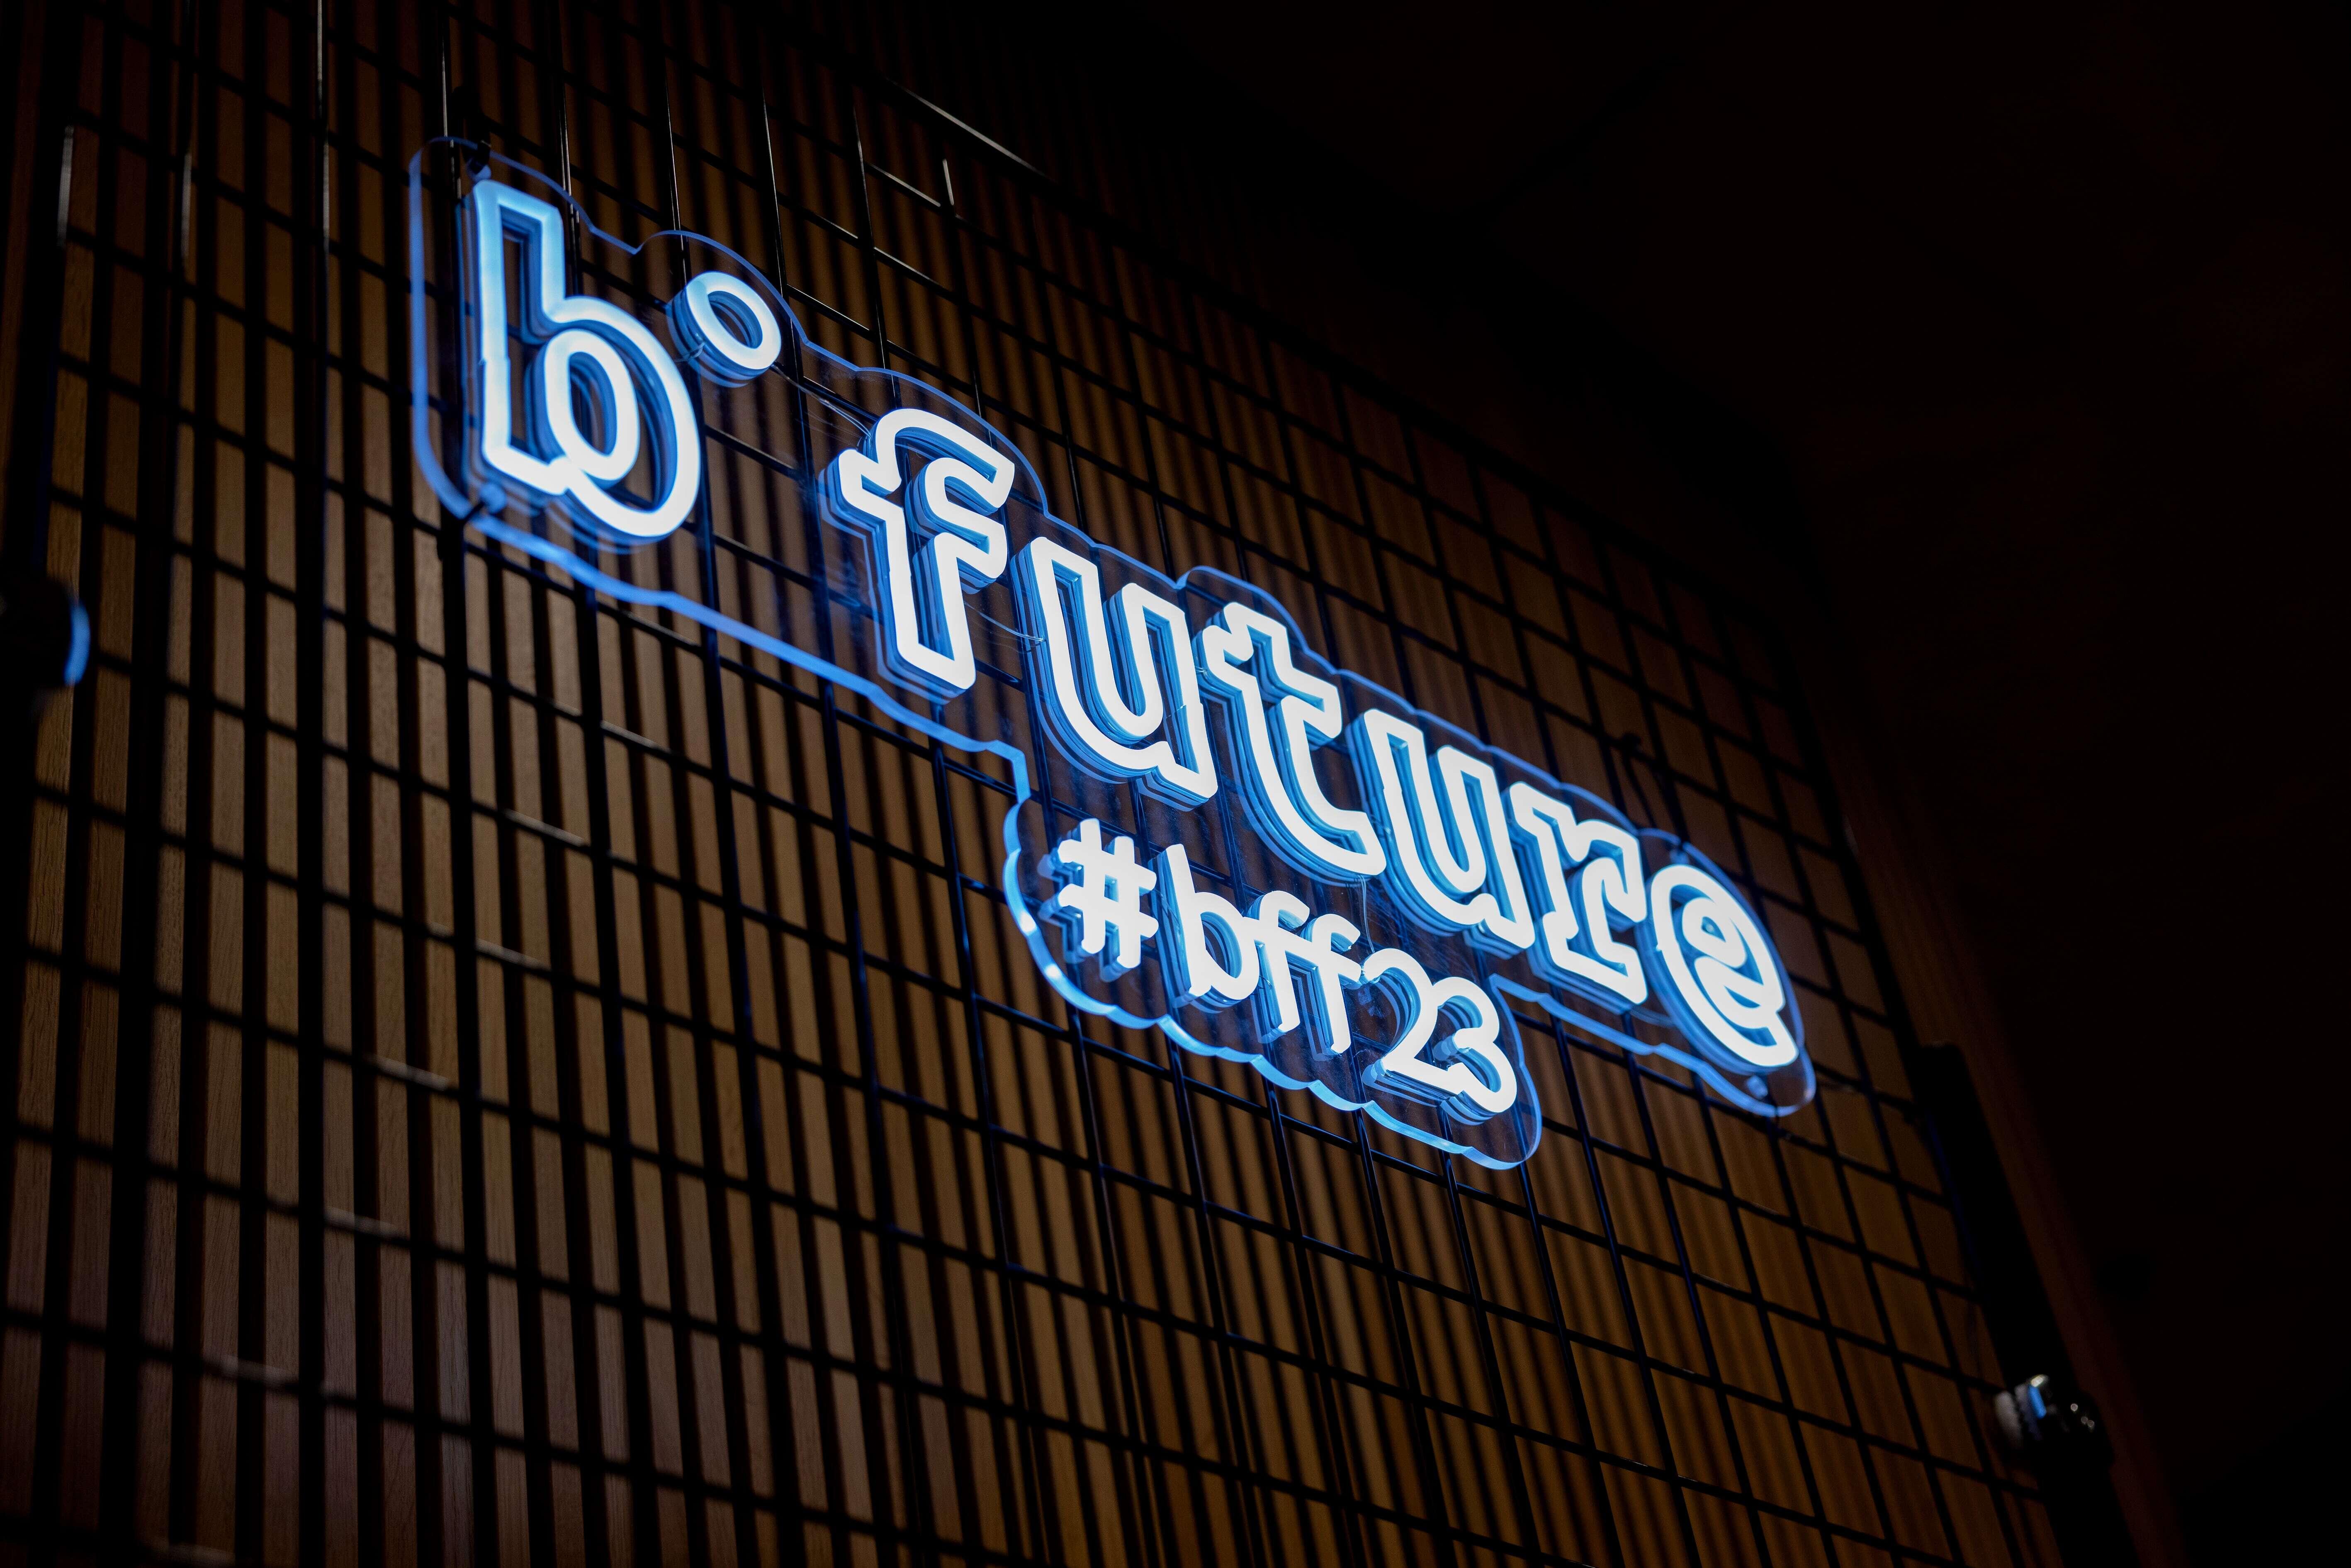 The b° future logo in light blue illuminated letters.